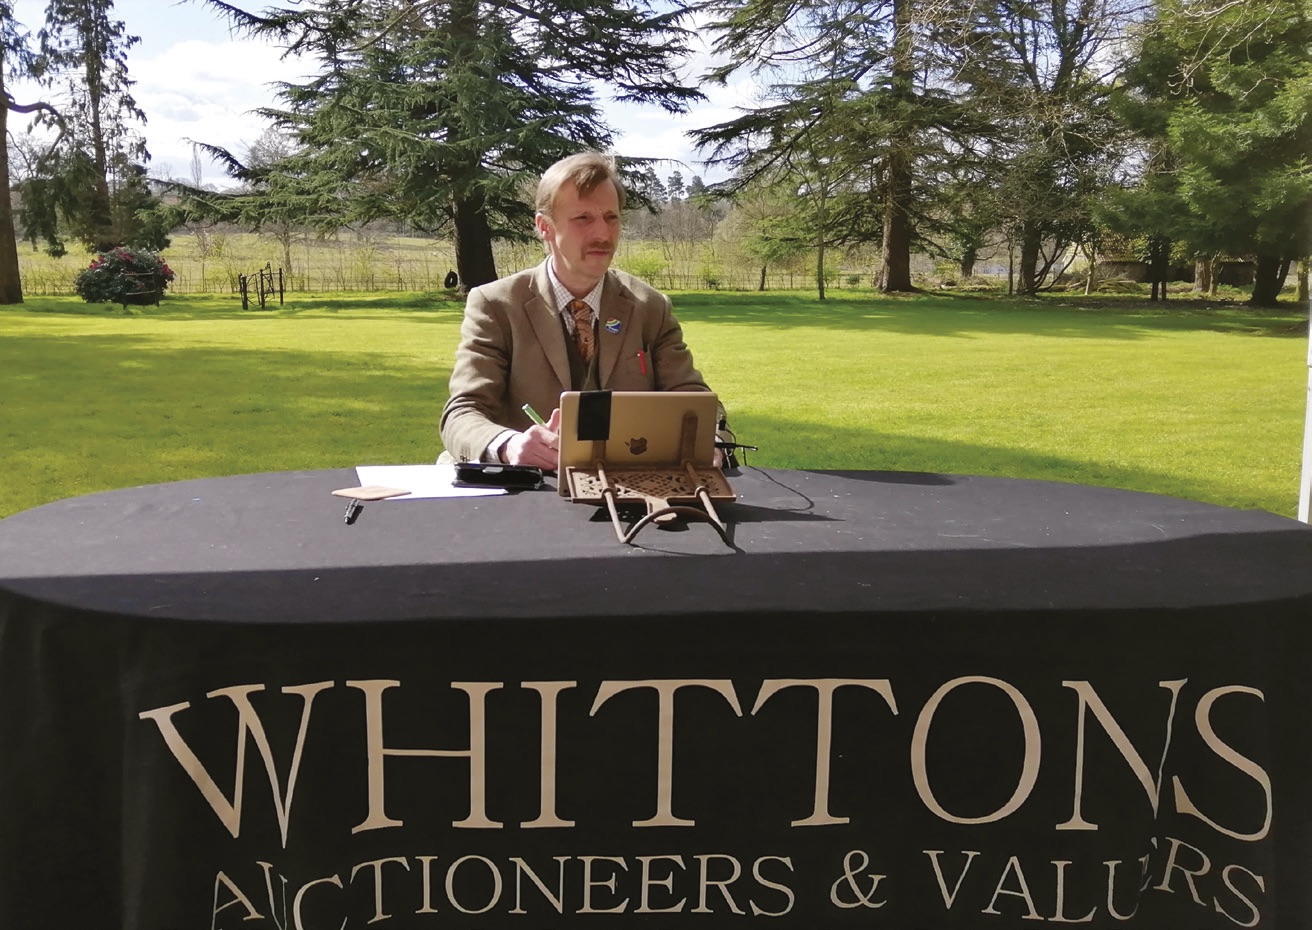 Edward Whitton holds auction in his garden